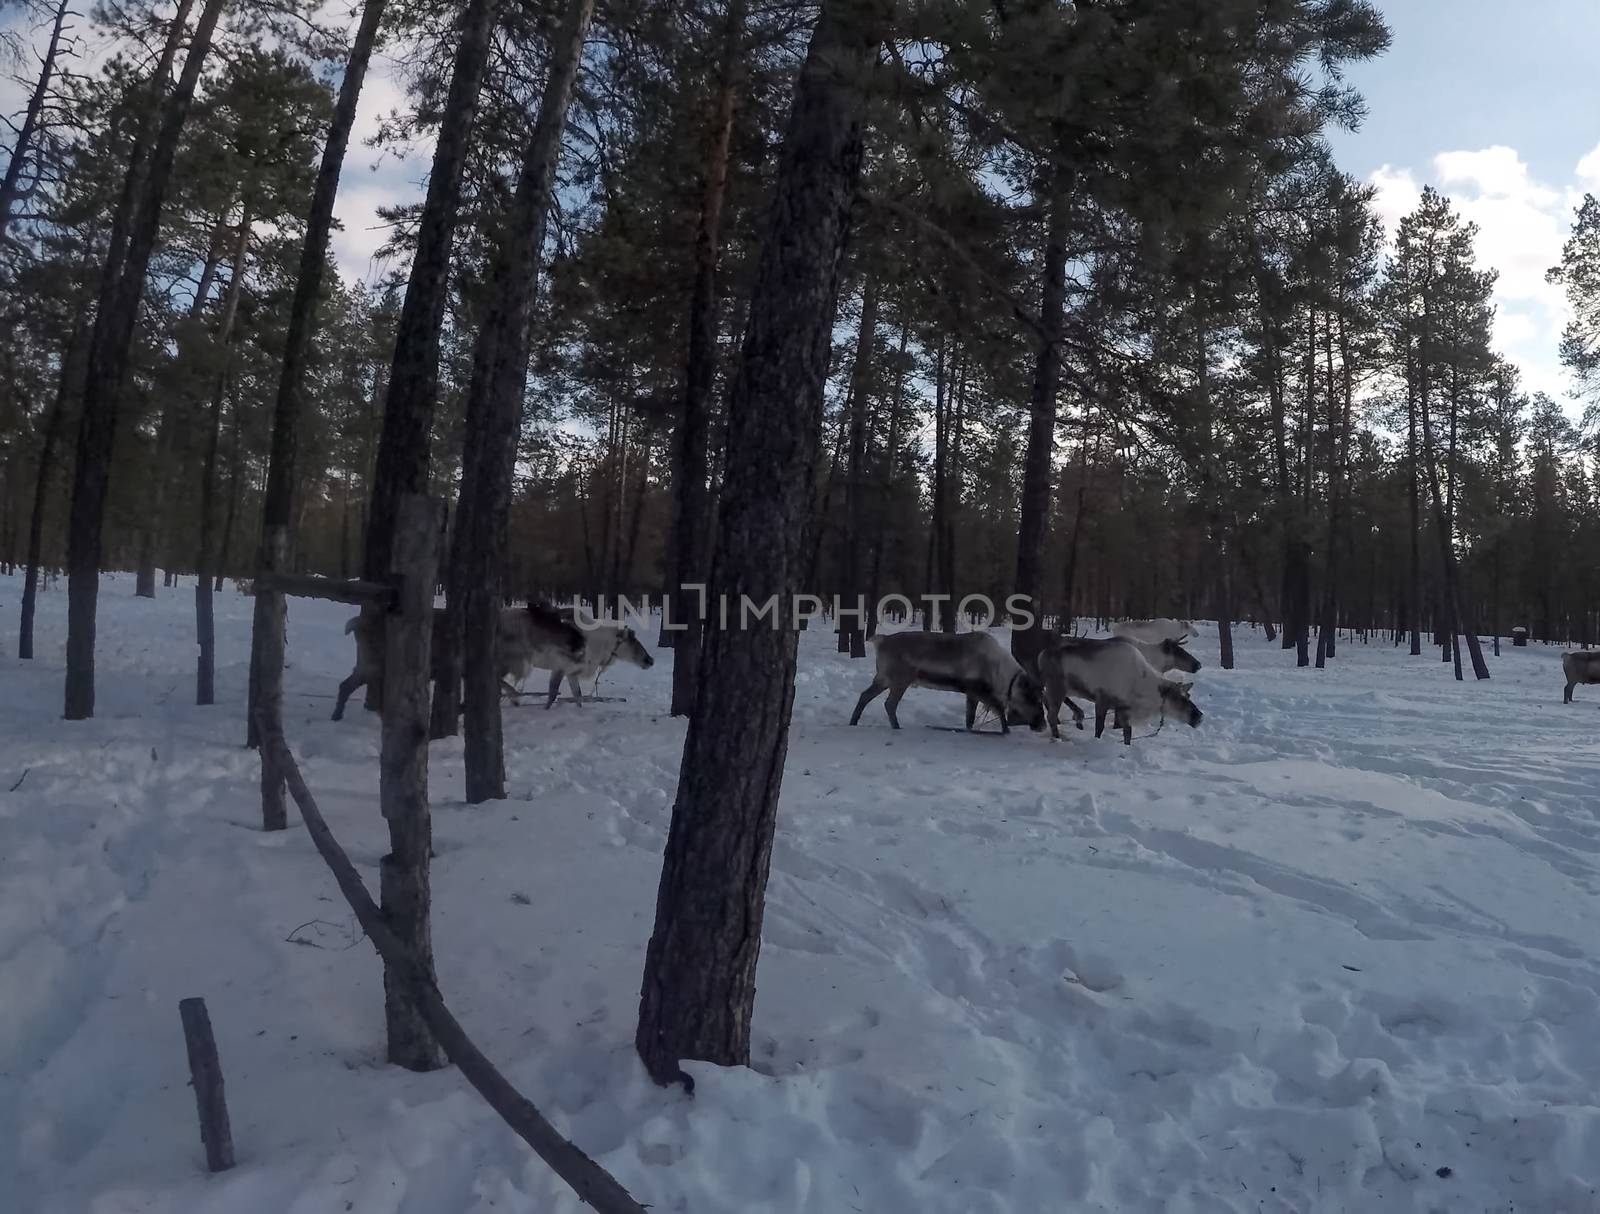 Reindeer in the winter forest. A deer farm.